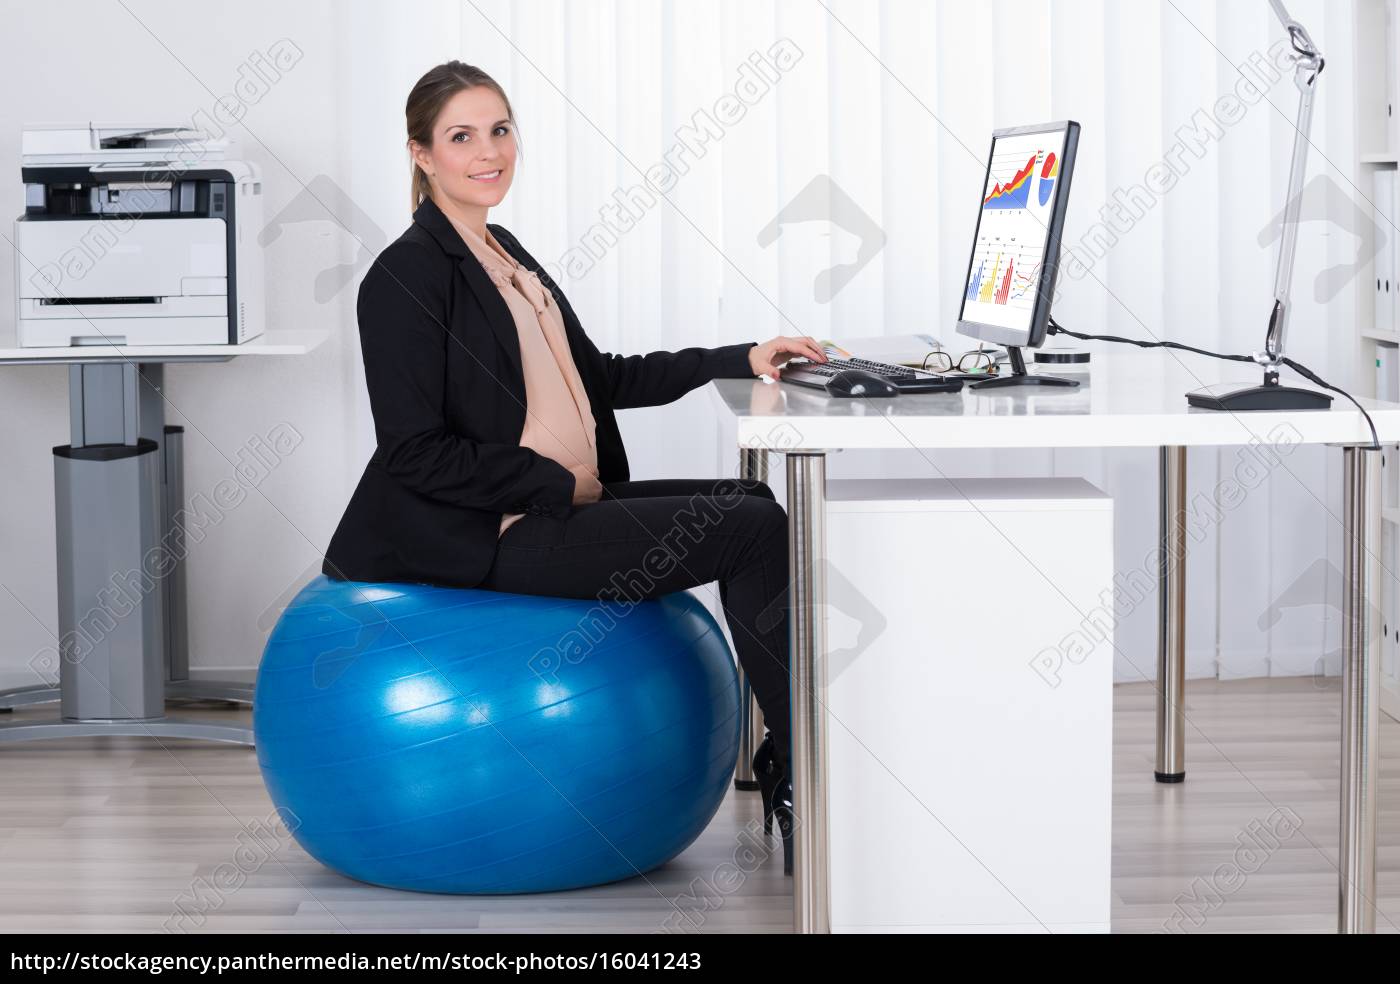 sitting on fitness ball